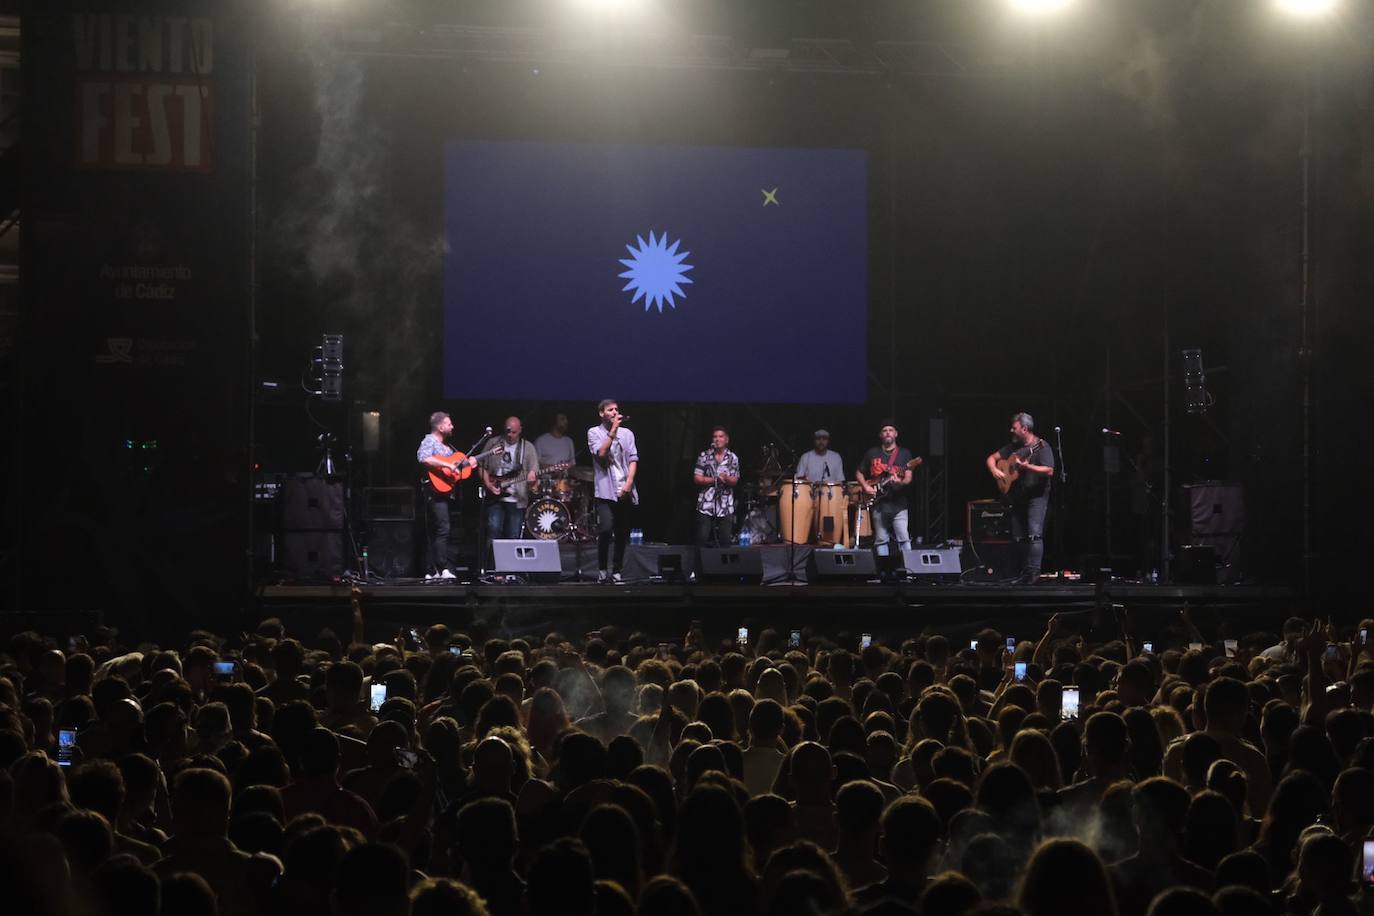 Fotos: Raúle inaugura el Viento Fest en la plaza de San Antonio